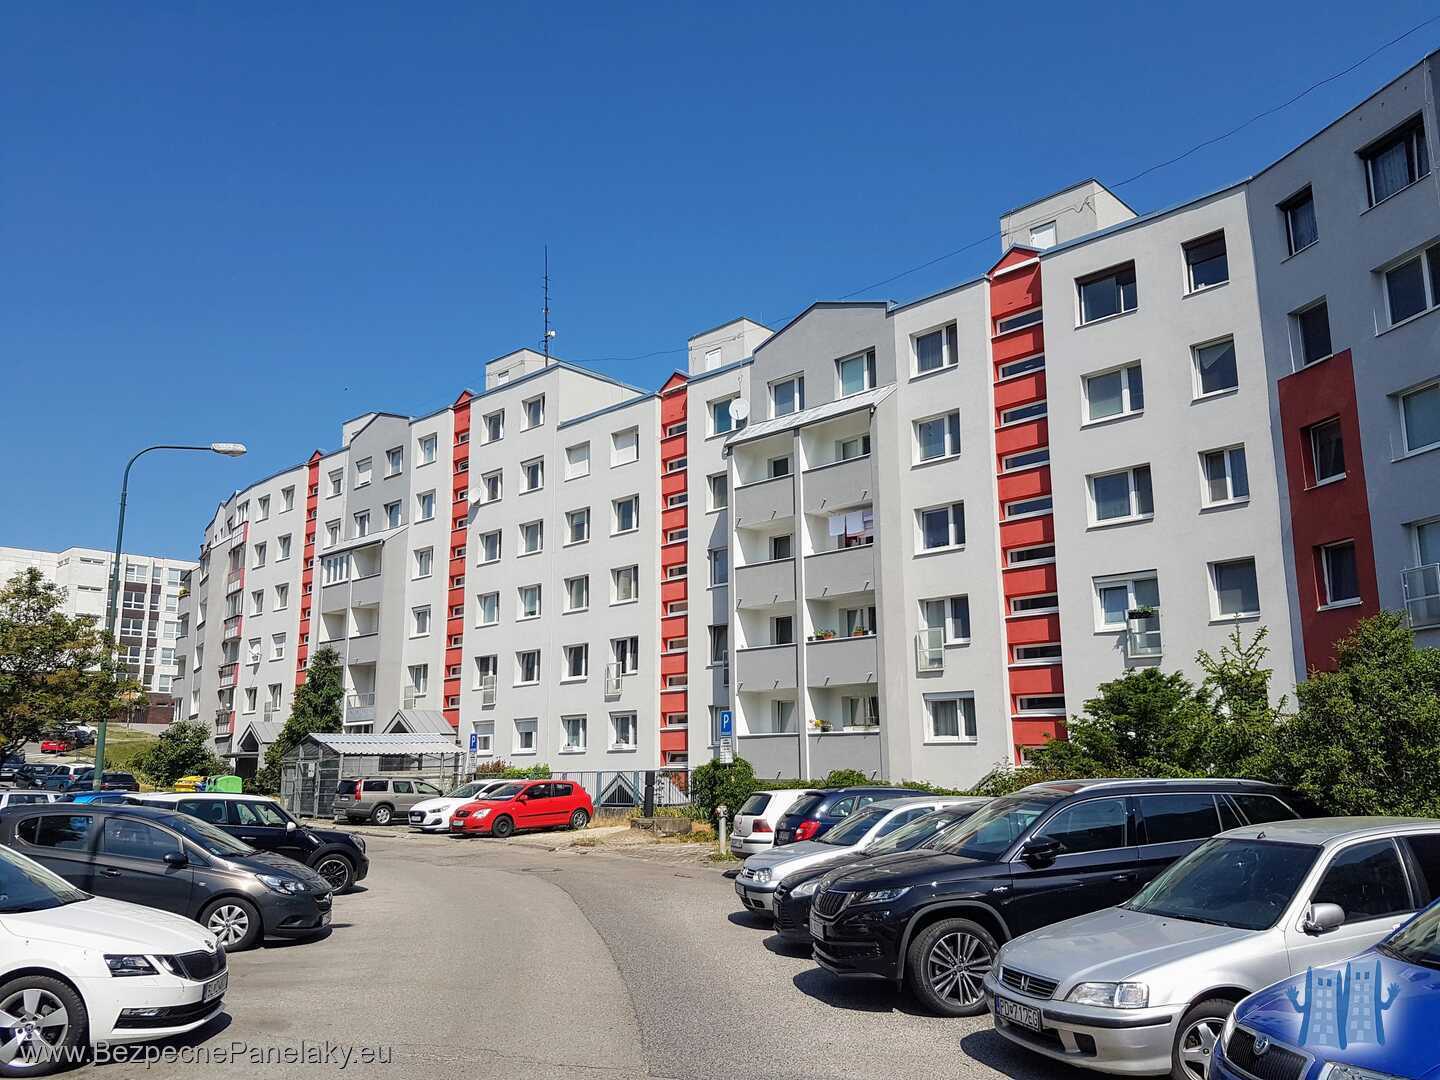 Bytový dom na Ľudovíta Fullu 30-38 v Bratislave